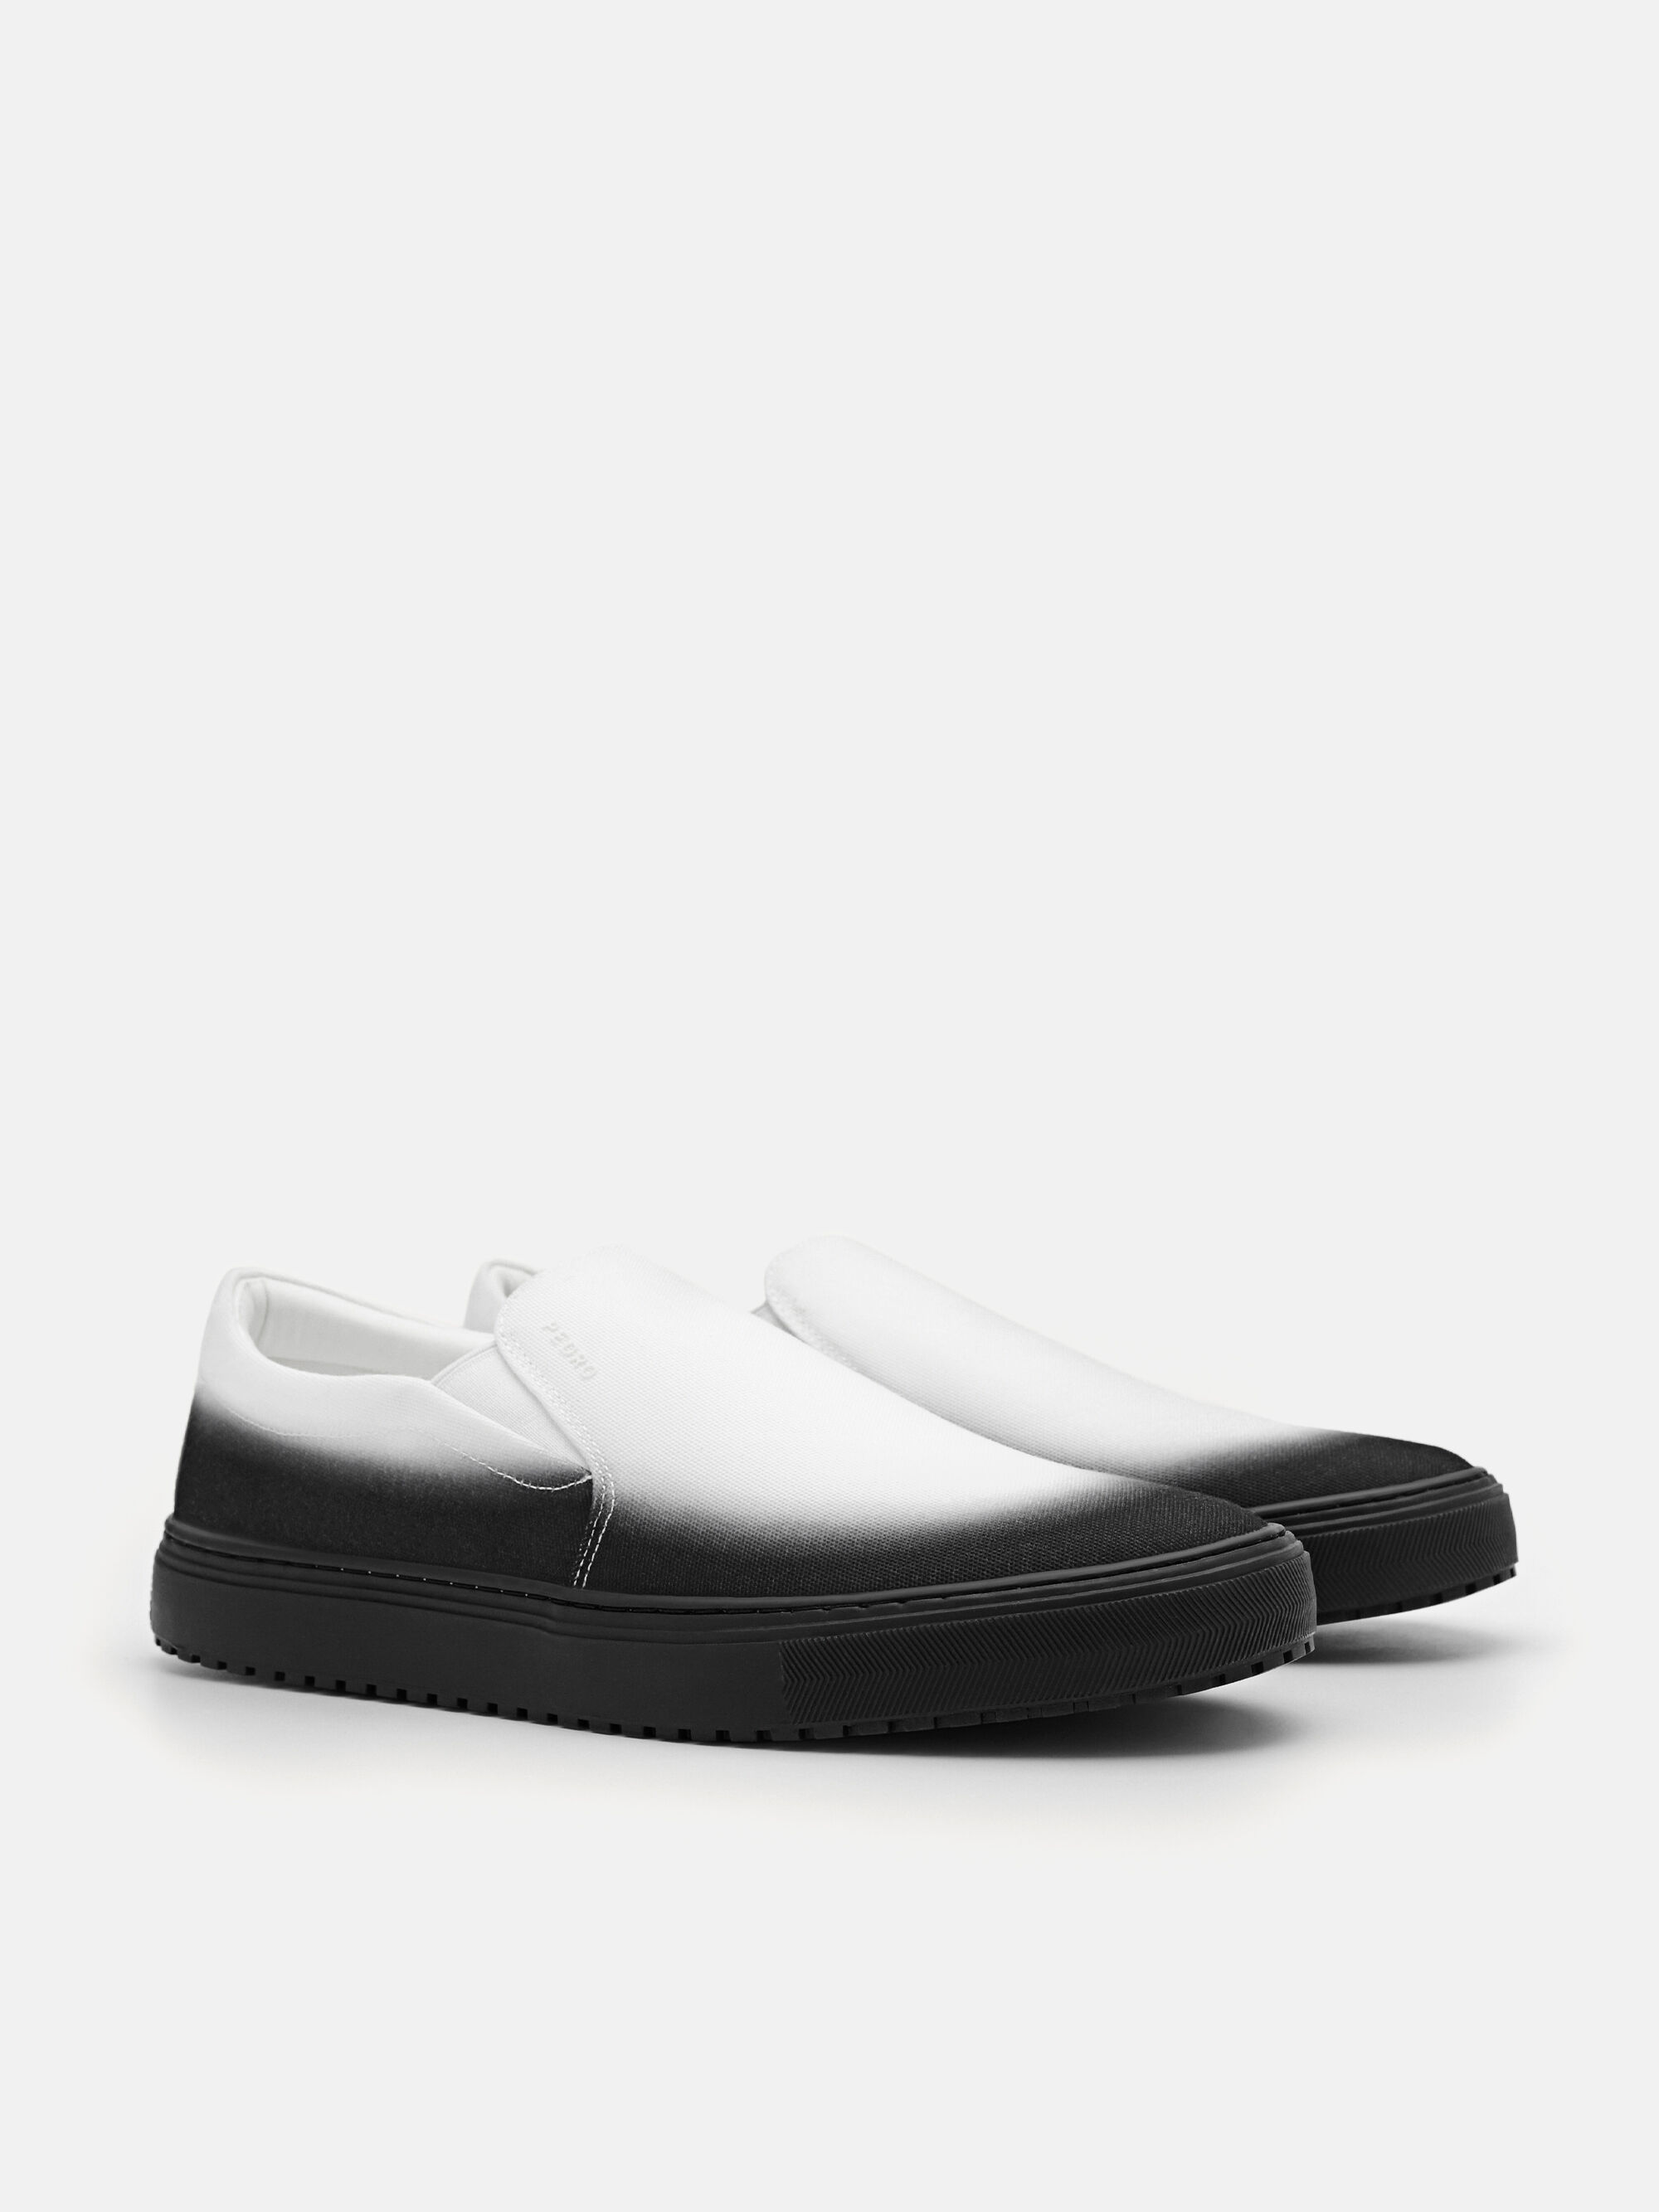 Zia Slip-On Sneakers, Black